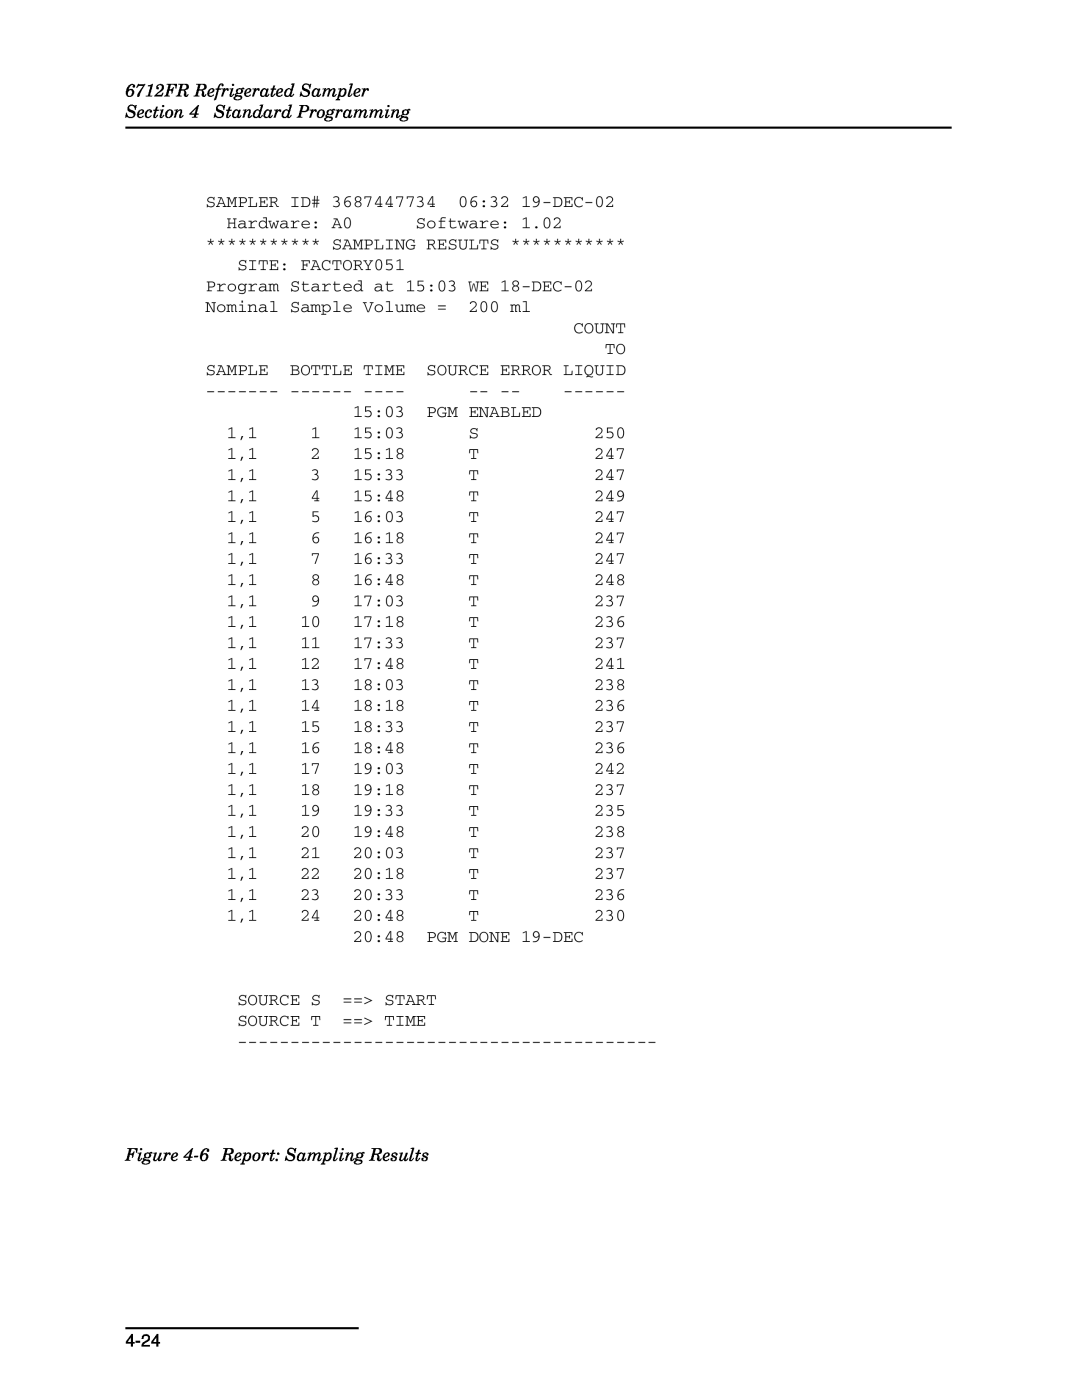 Teledyne 6712FR Refrigerated Sampler Standard Programming, 6 Report Sampling Results, Source Error Liquid, == Time 